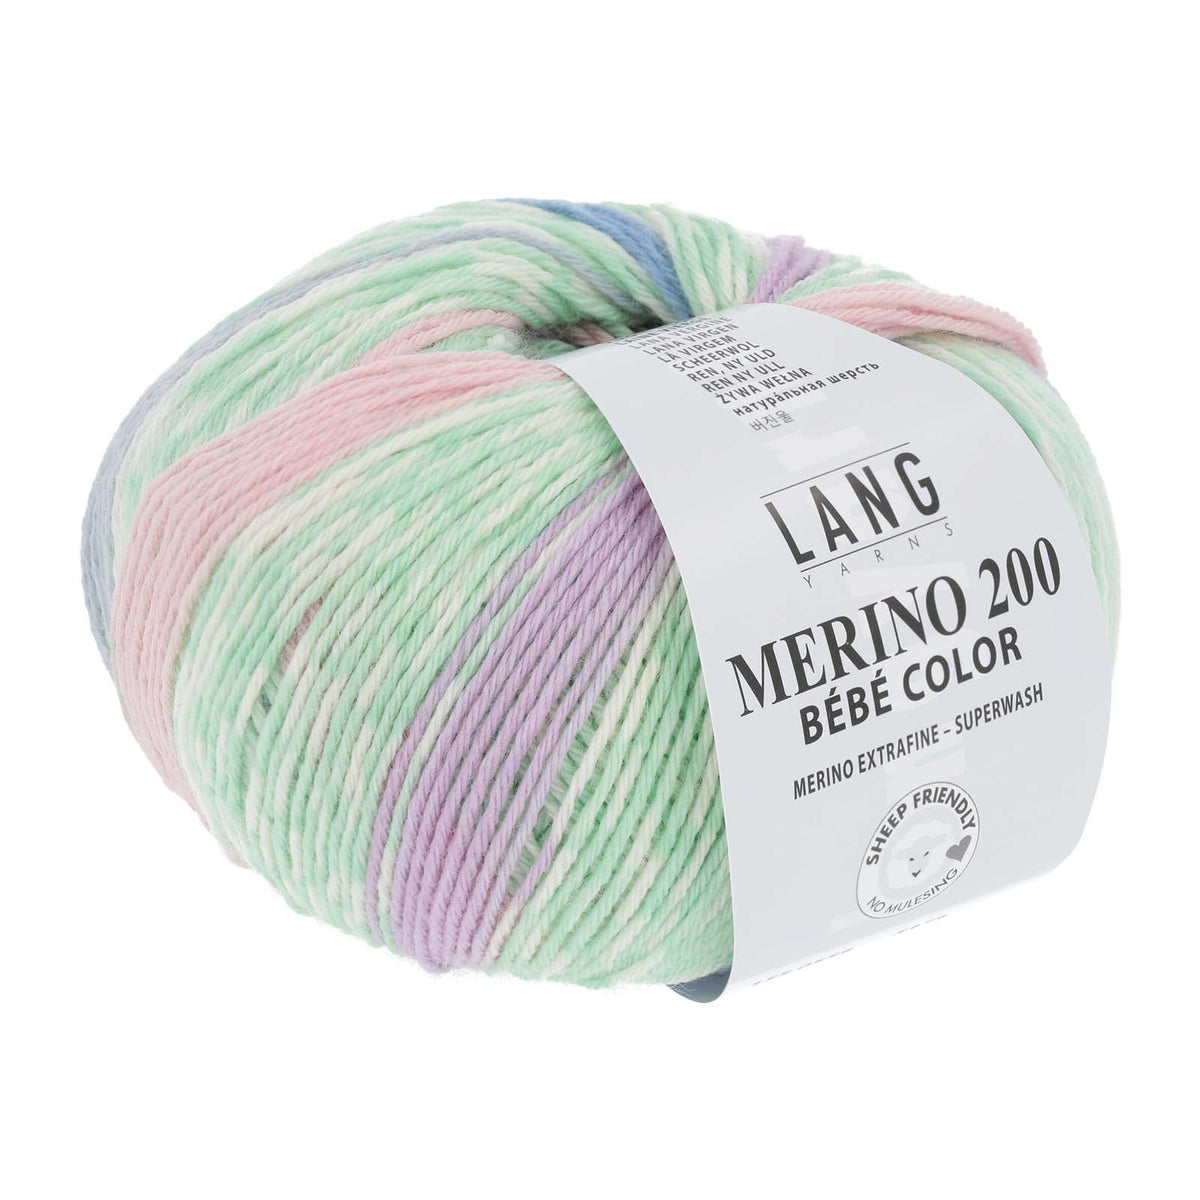 Lang Yarns Merino 200 Bebe Color